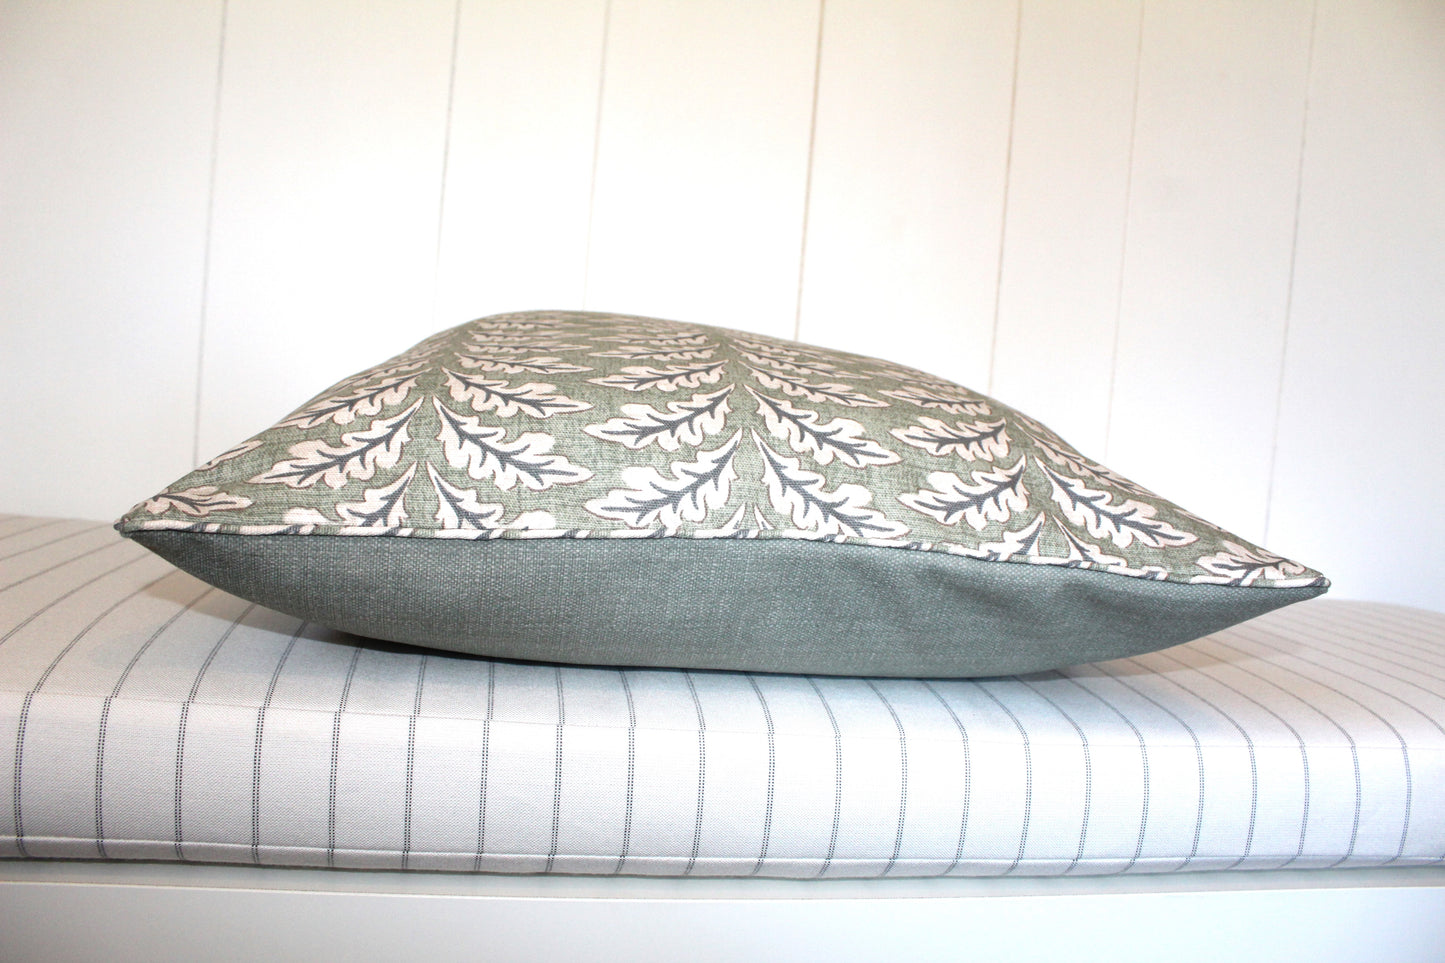 Woodcote Oak Forest Cushion covers